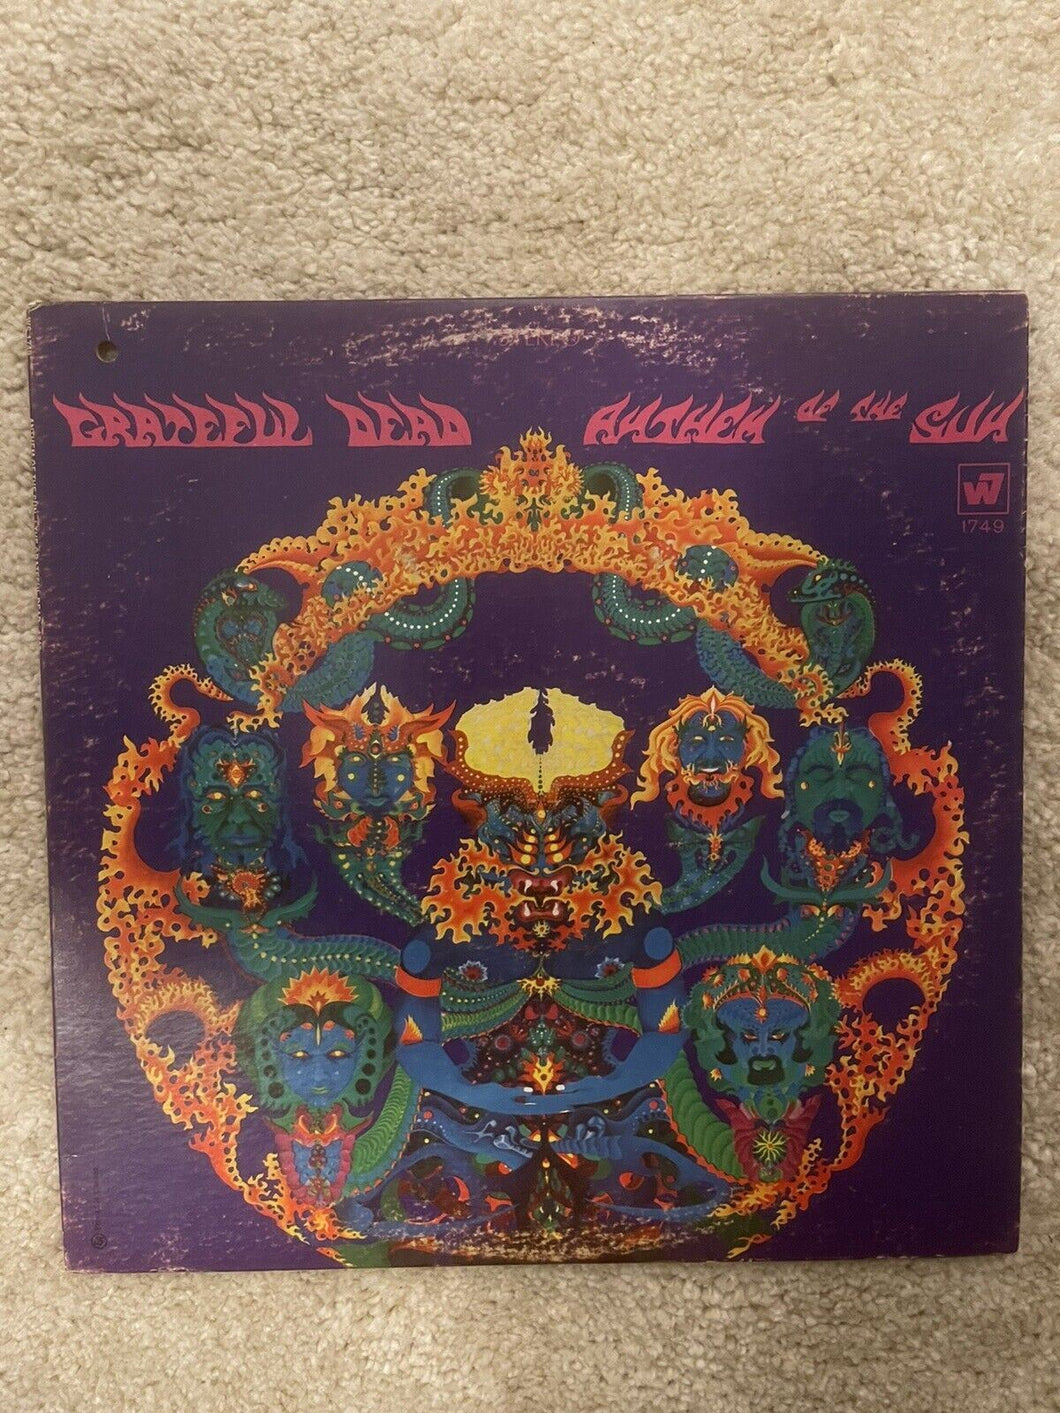 Greateful Dead Anthem of the sun vinyl album record 1968